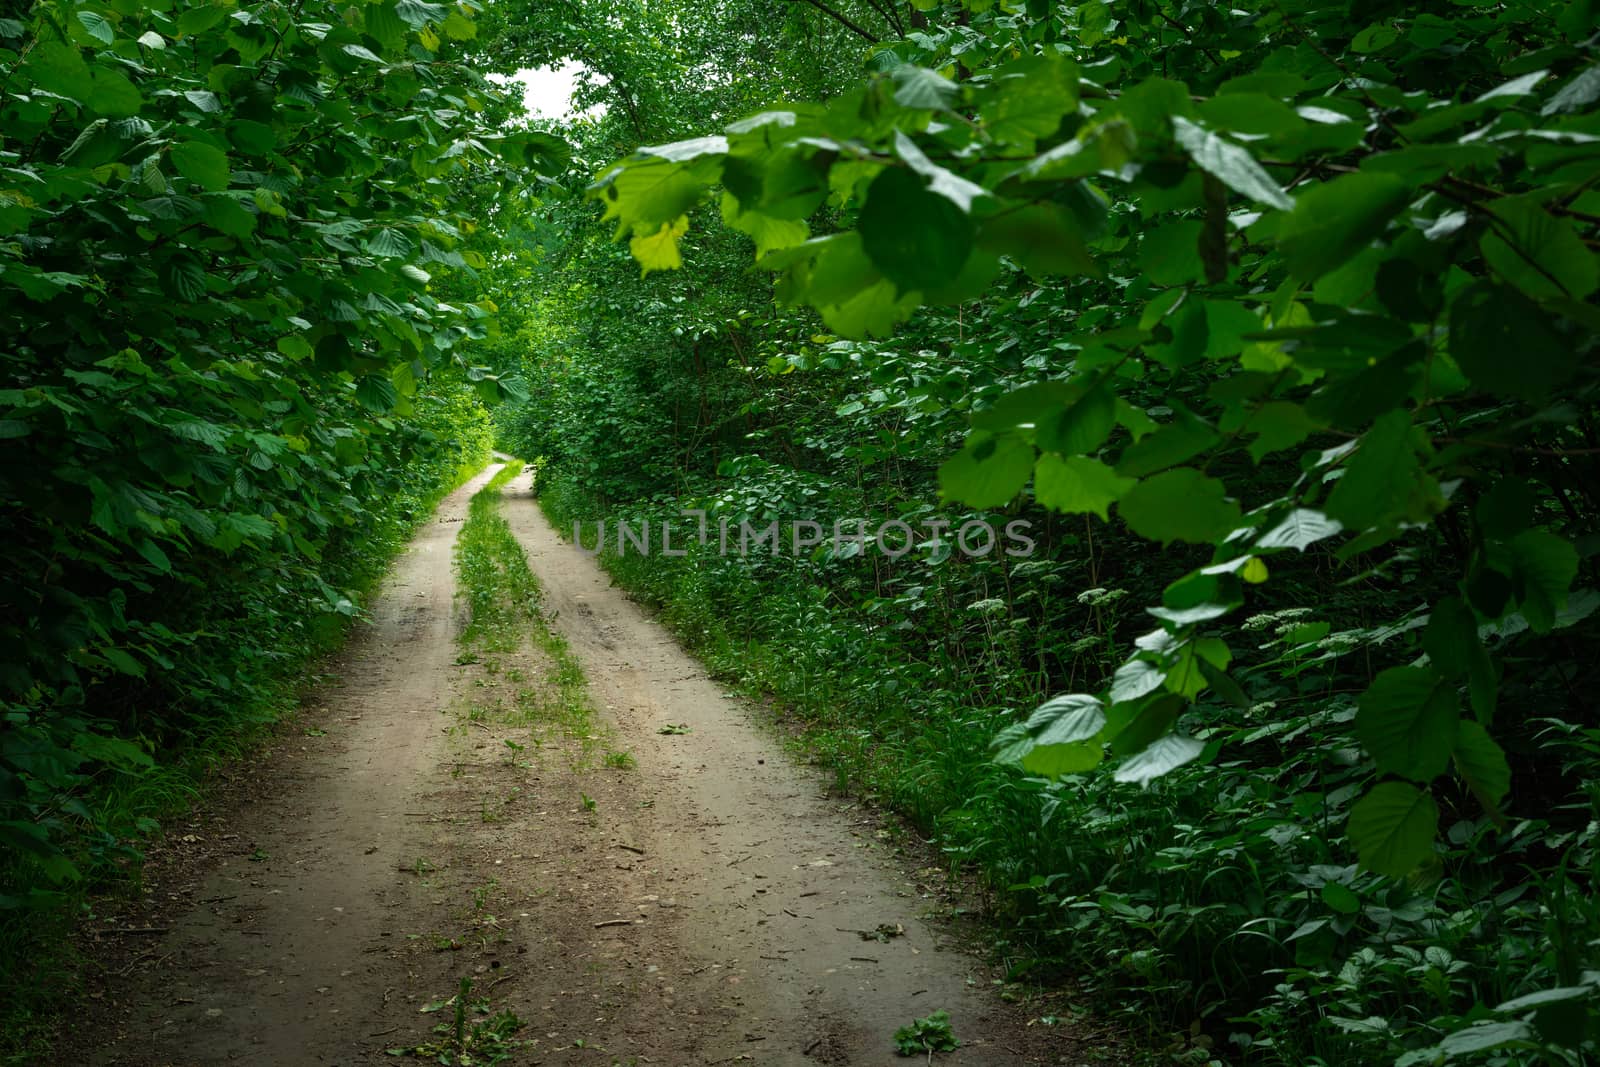 Dirt road through green dense deciduous forest by darekb22